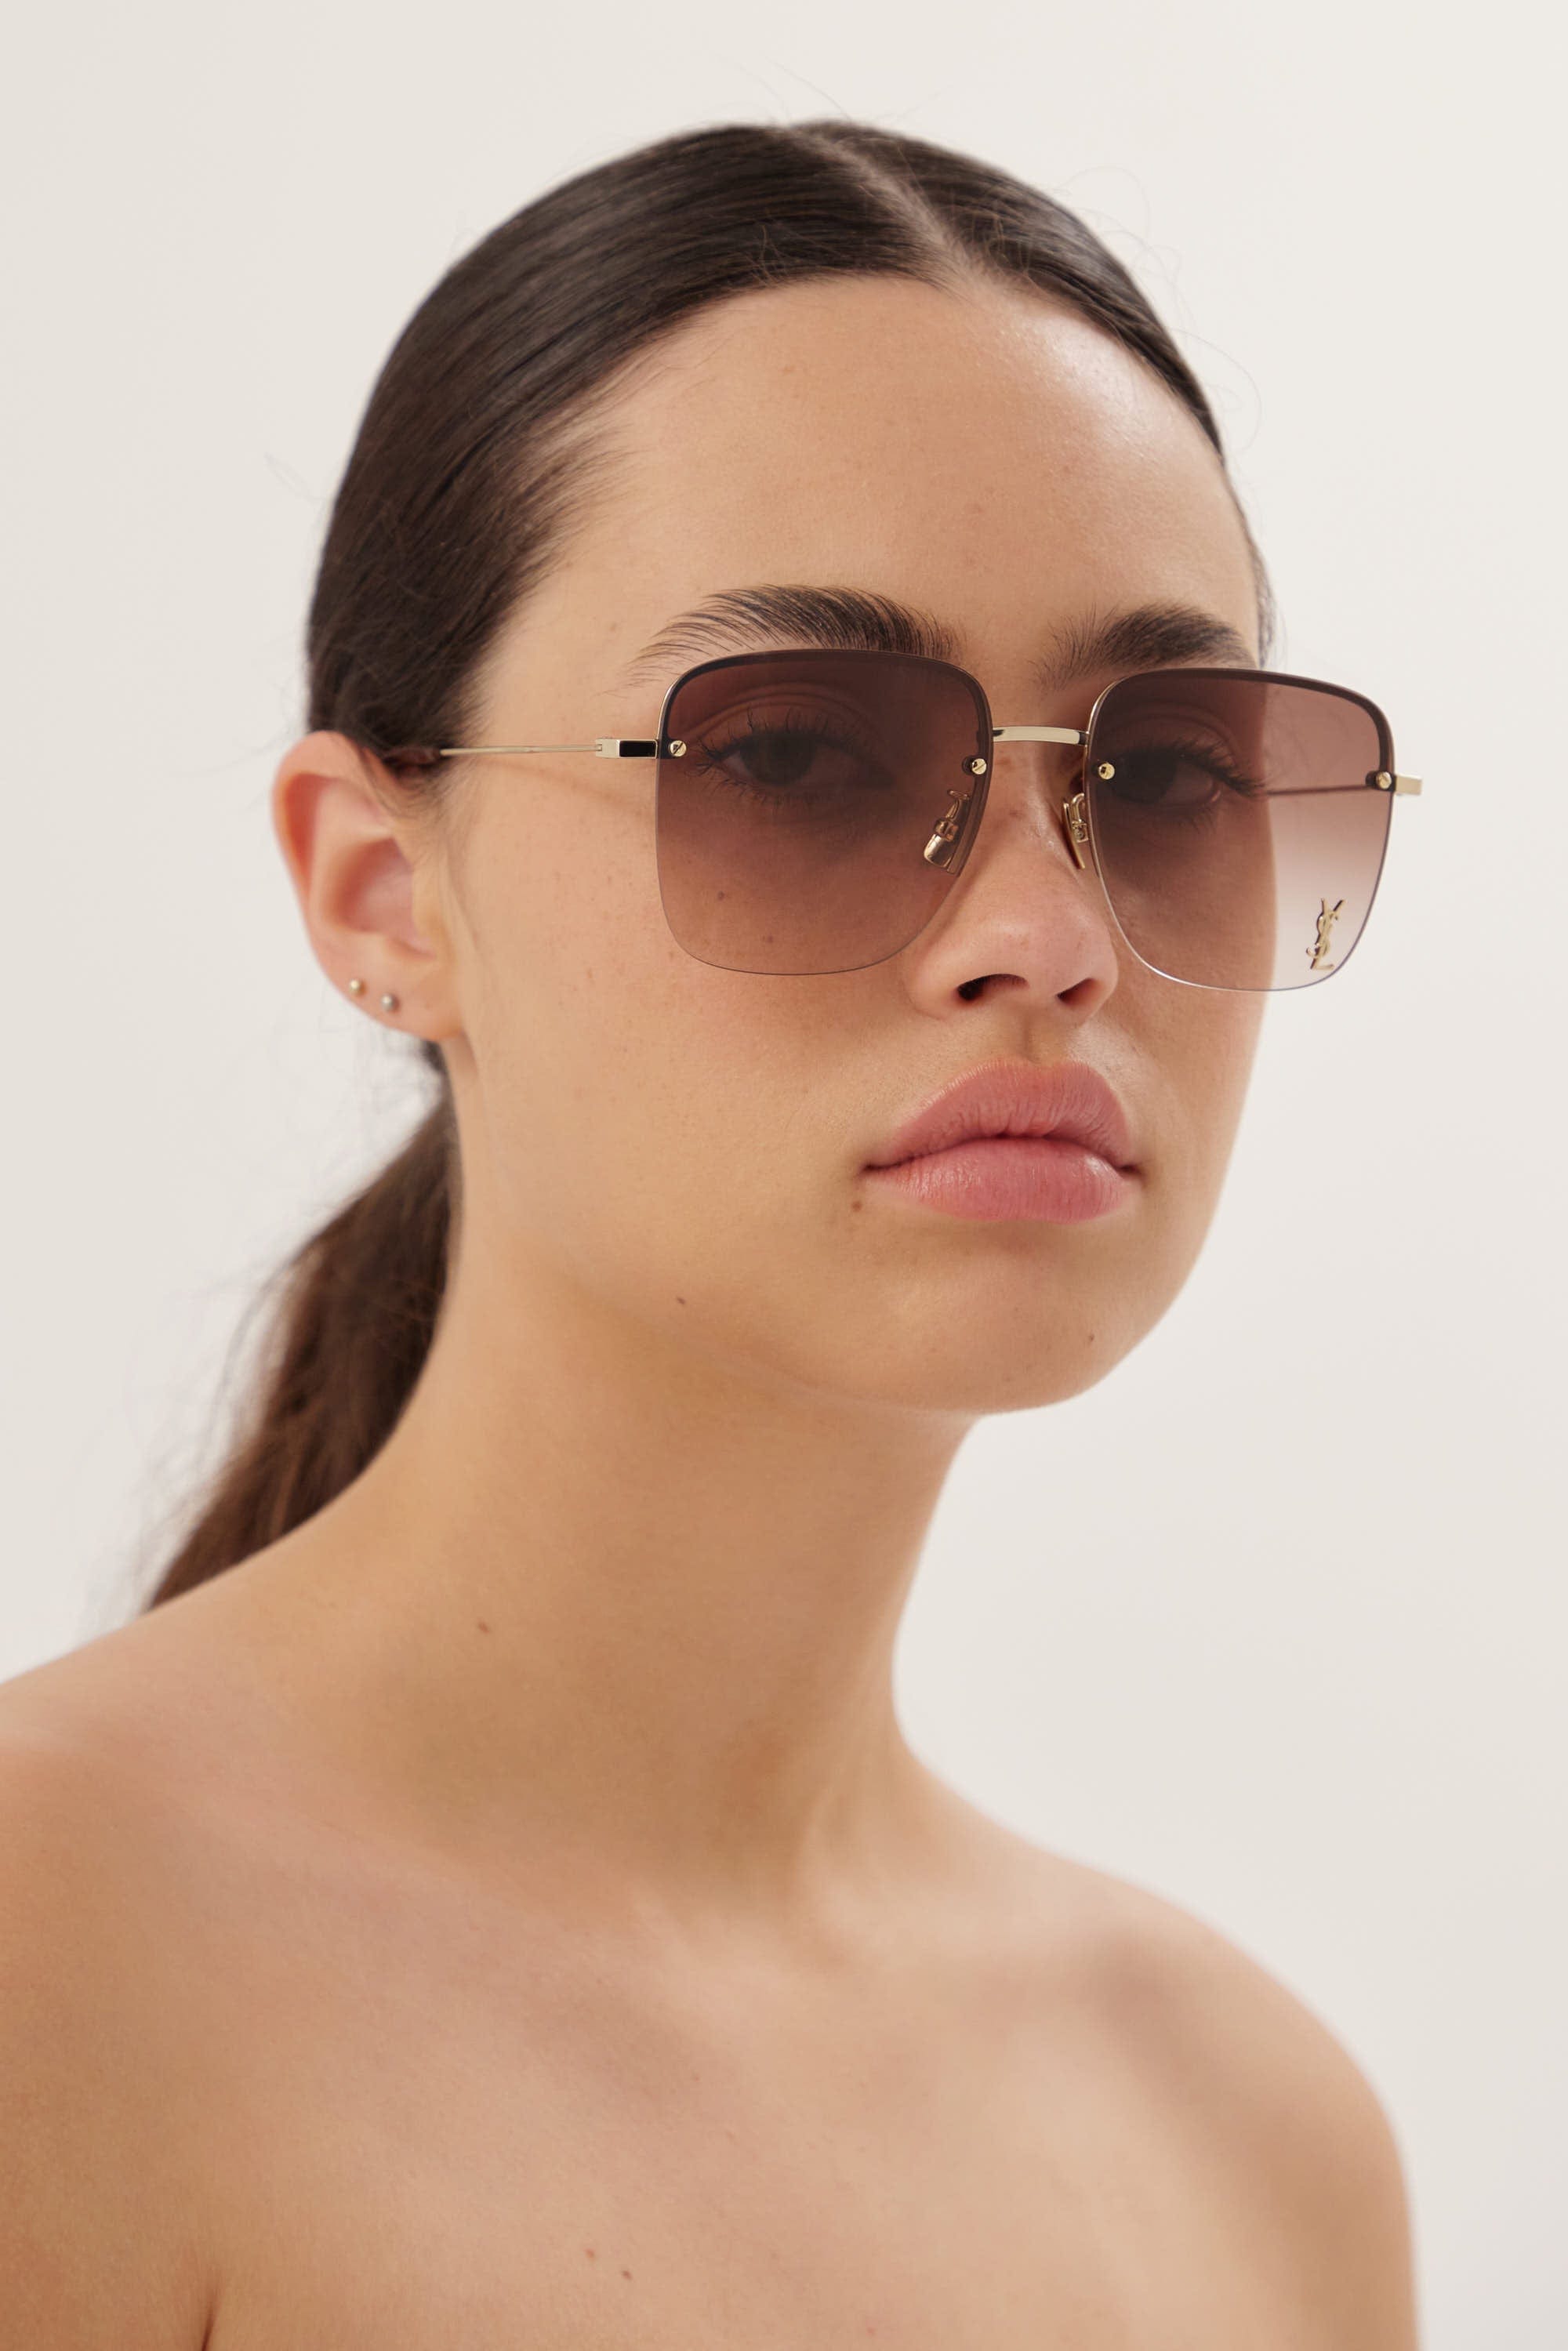 Saint Laurent gold squared metal sunglasses - Eyewear Club